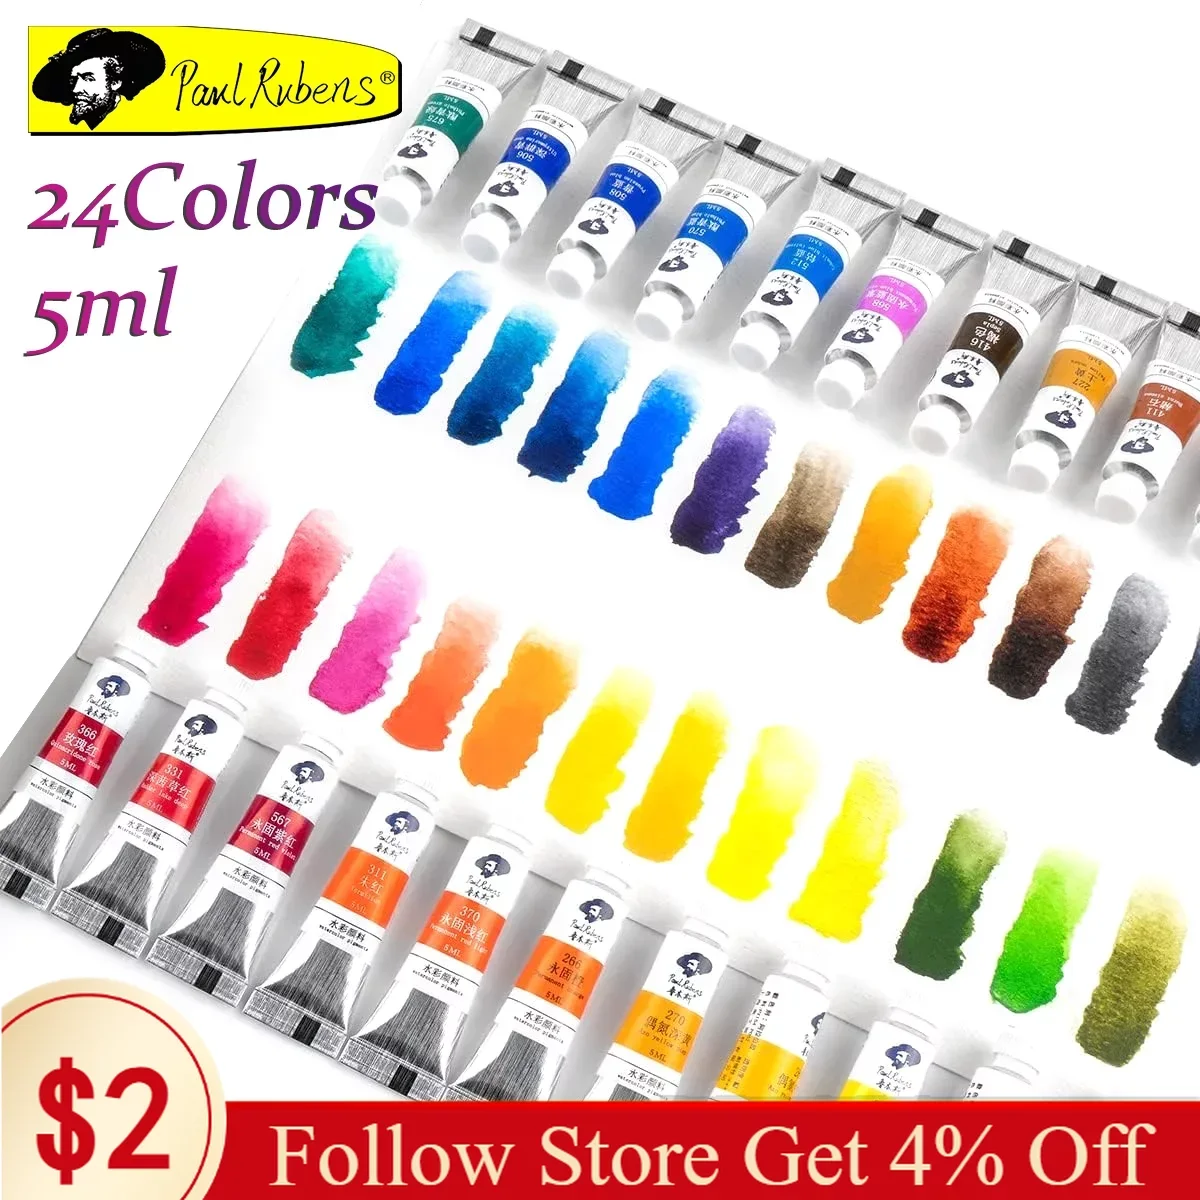 

Paul Rubens 24 Colors 5ml Watercolor Paint Set Professional Tube Painting Pigment Art Supplies for Painters Artists Students